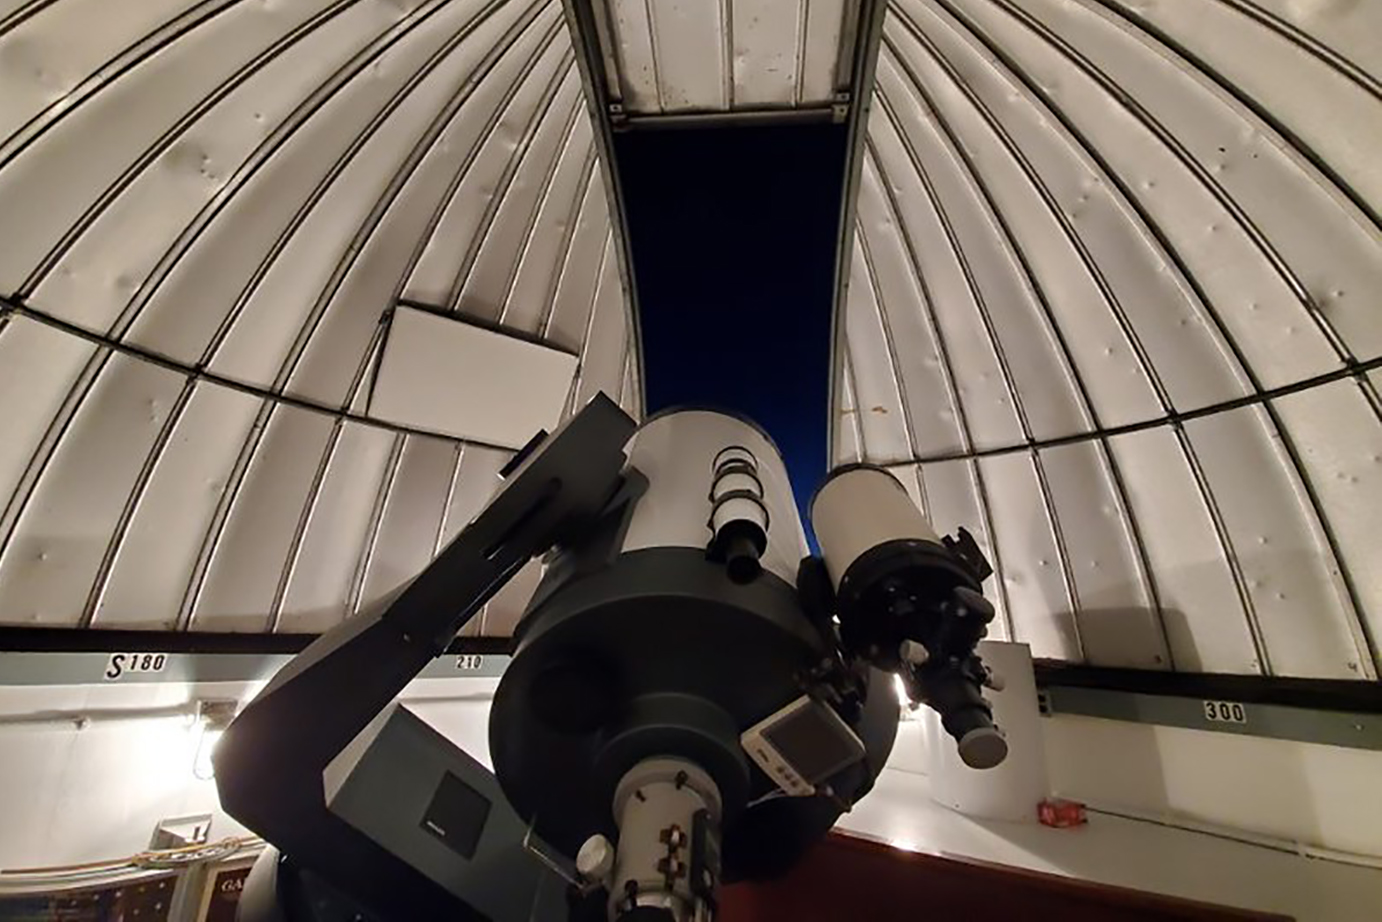 Image of the telescope